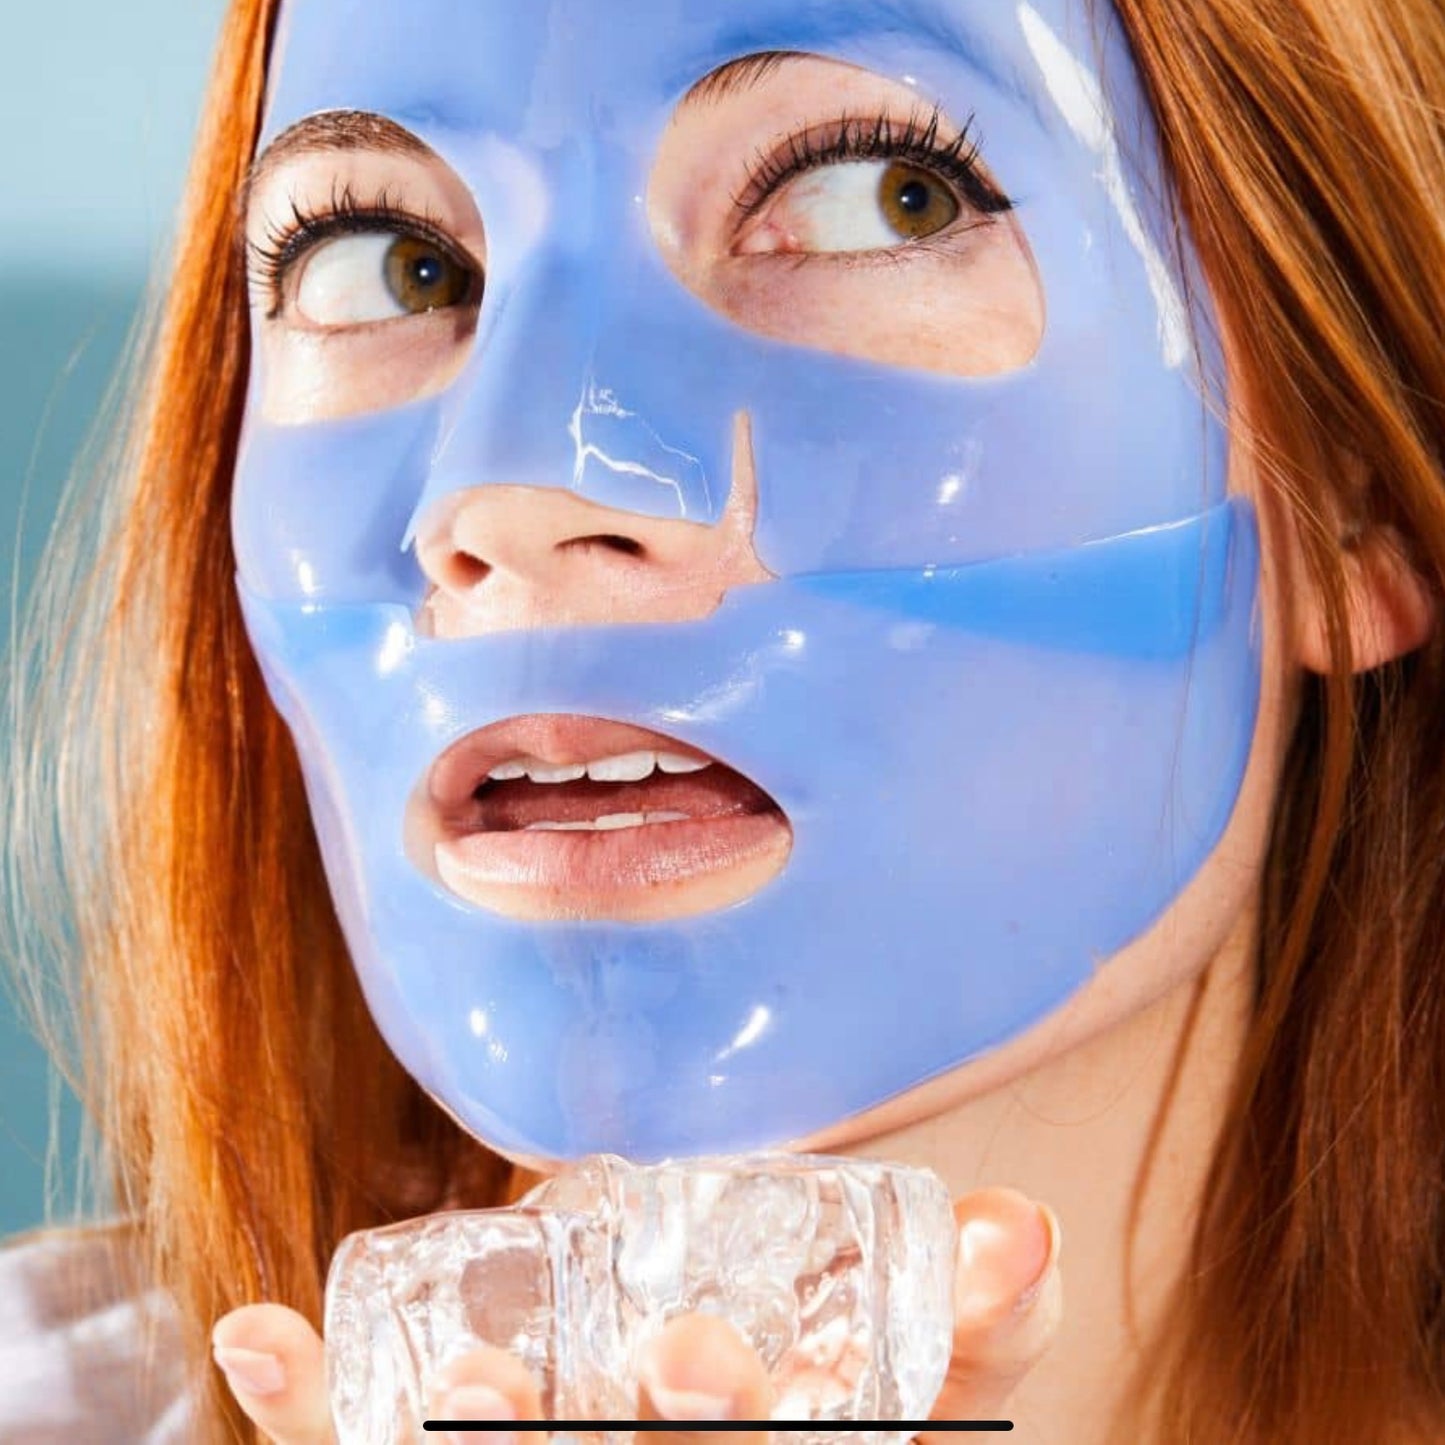 Patchology Serve Chilled™ On Ice Hydrogel Face Mask